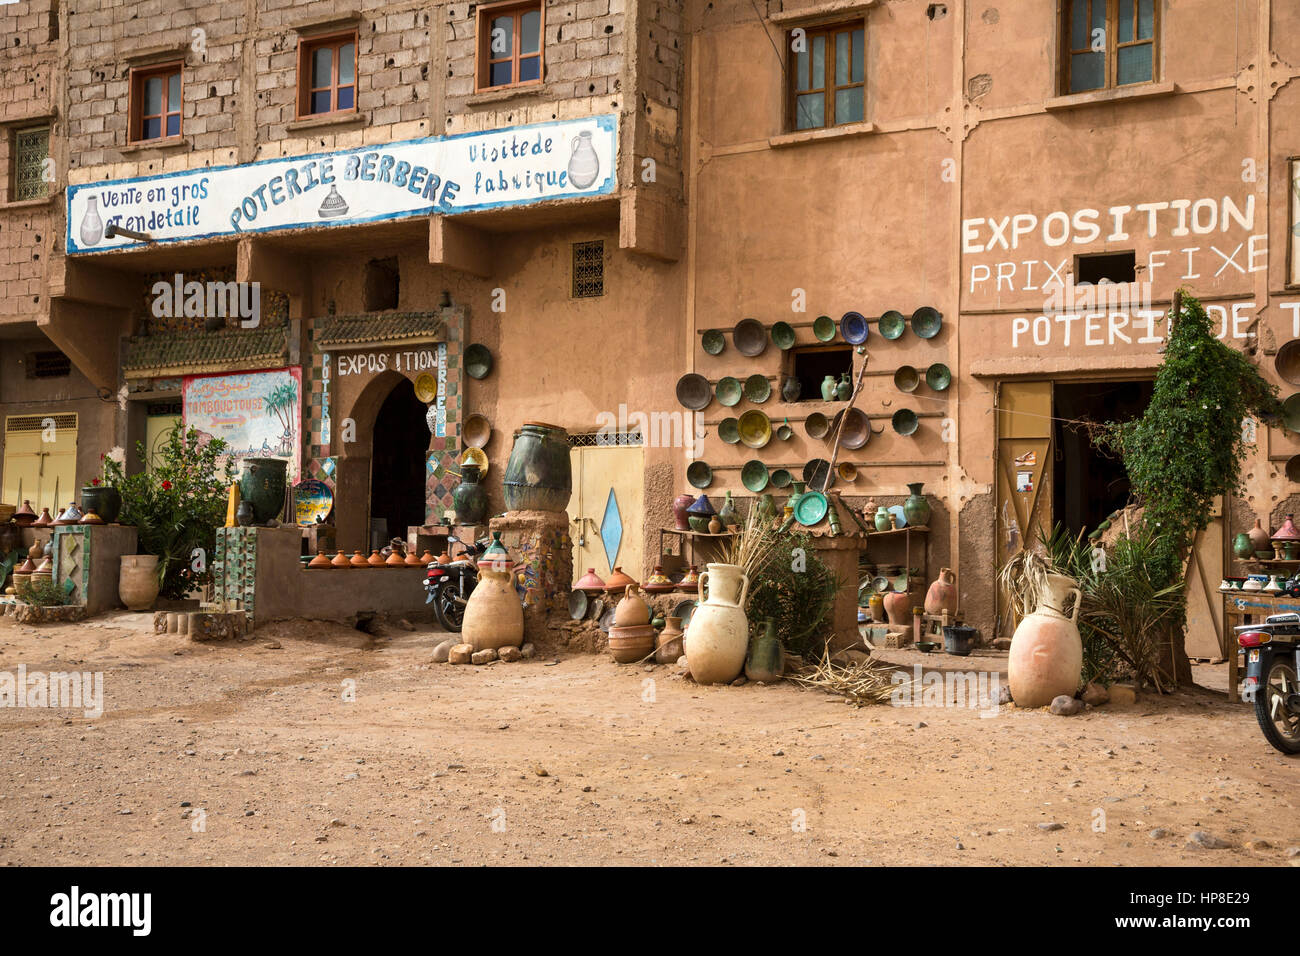 Tamegroute, in der Nähe von Zagora, Marokko.  Töpferei. Stockfoto